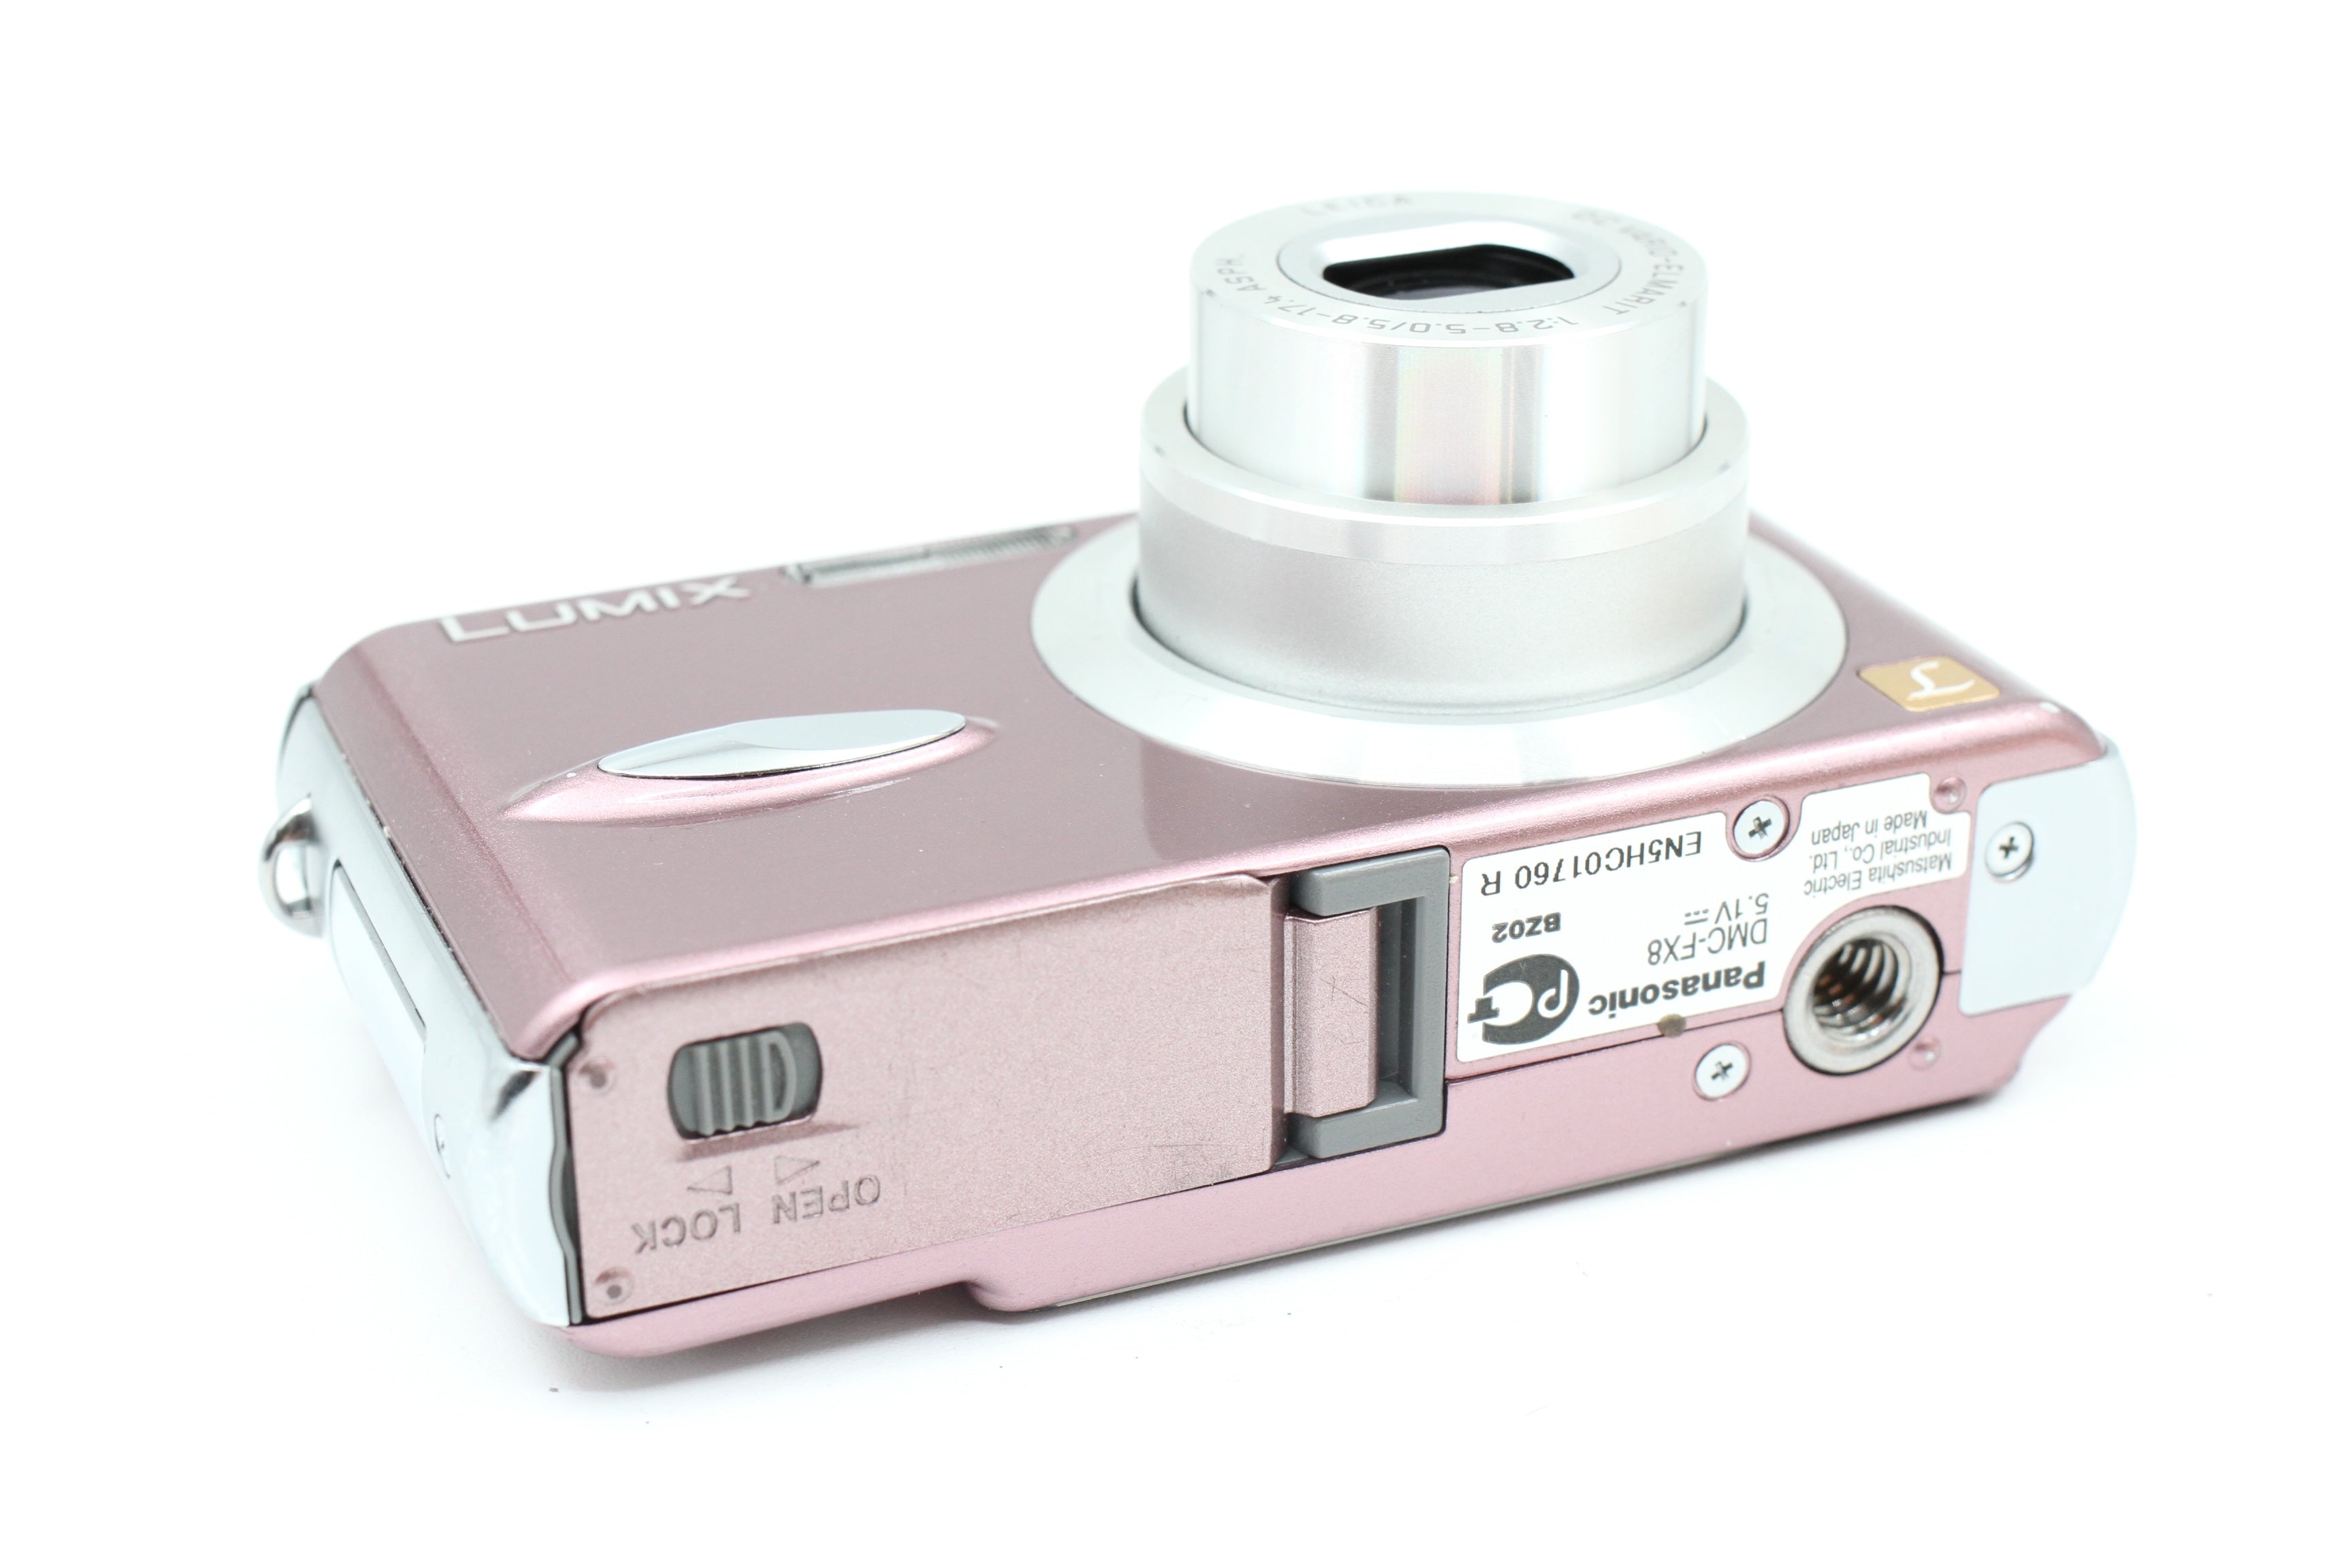 Panasonic Lumix DMC-FX8 Rose Pink Digital Compact Camera w/ Vario-Elmar Lens